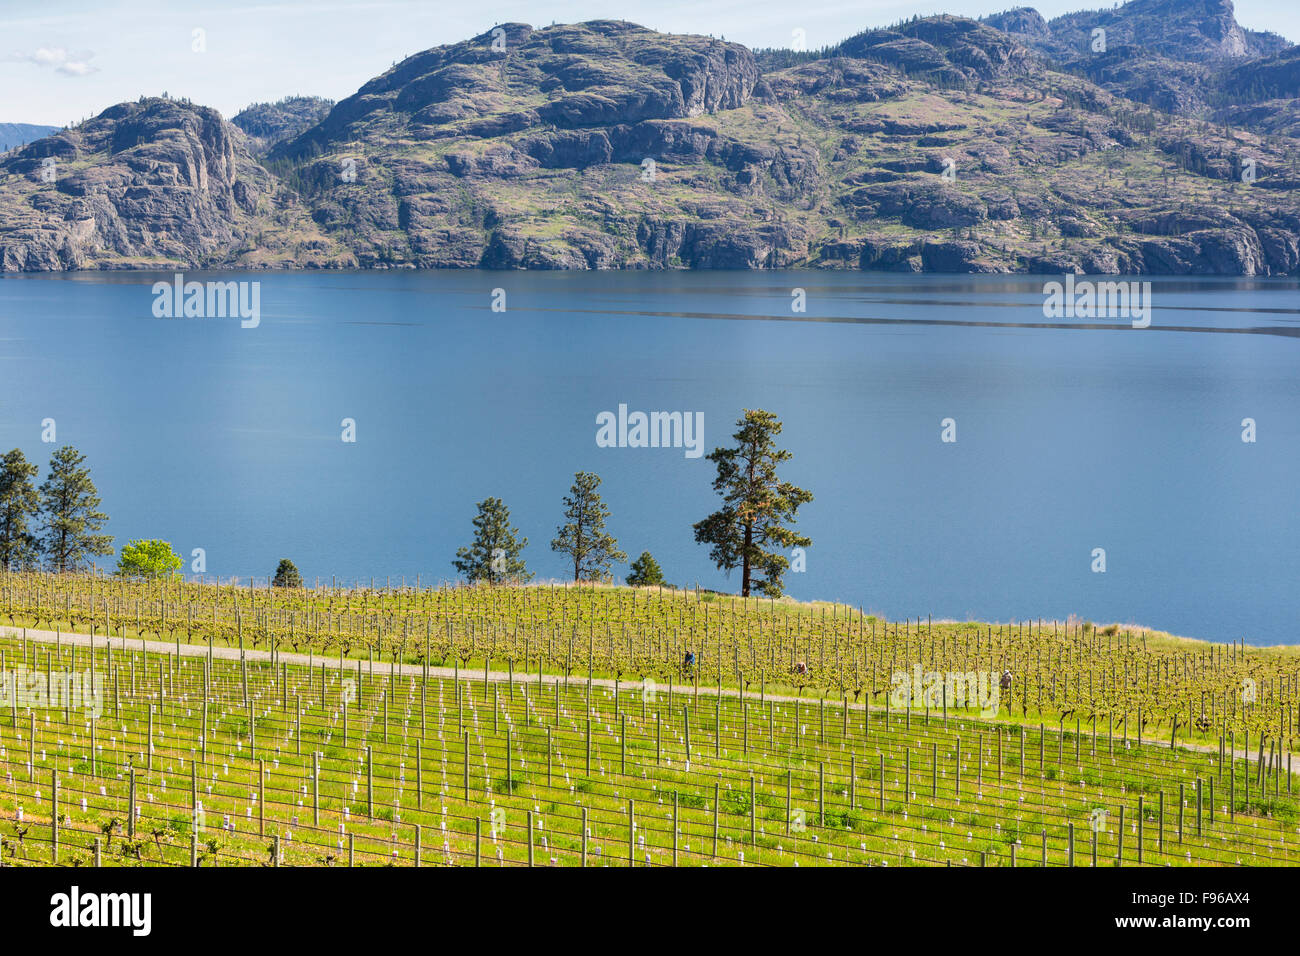 View of vineyards and Okanagan Lake, Summerland, Okanagan Valley, British Columbia, Canada Stock Photo